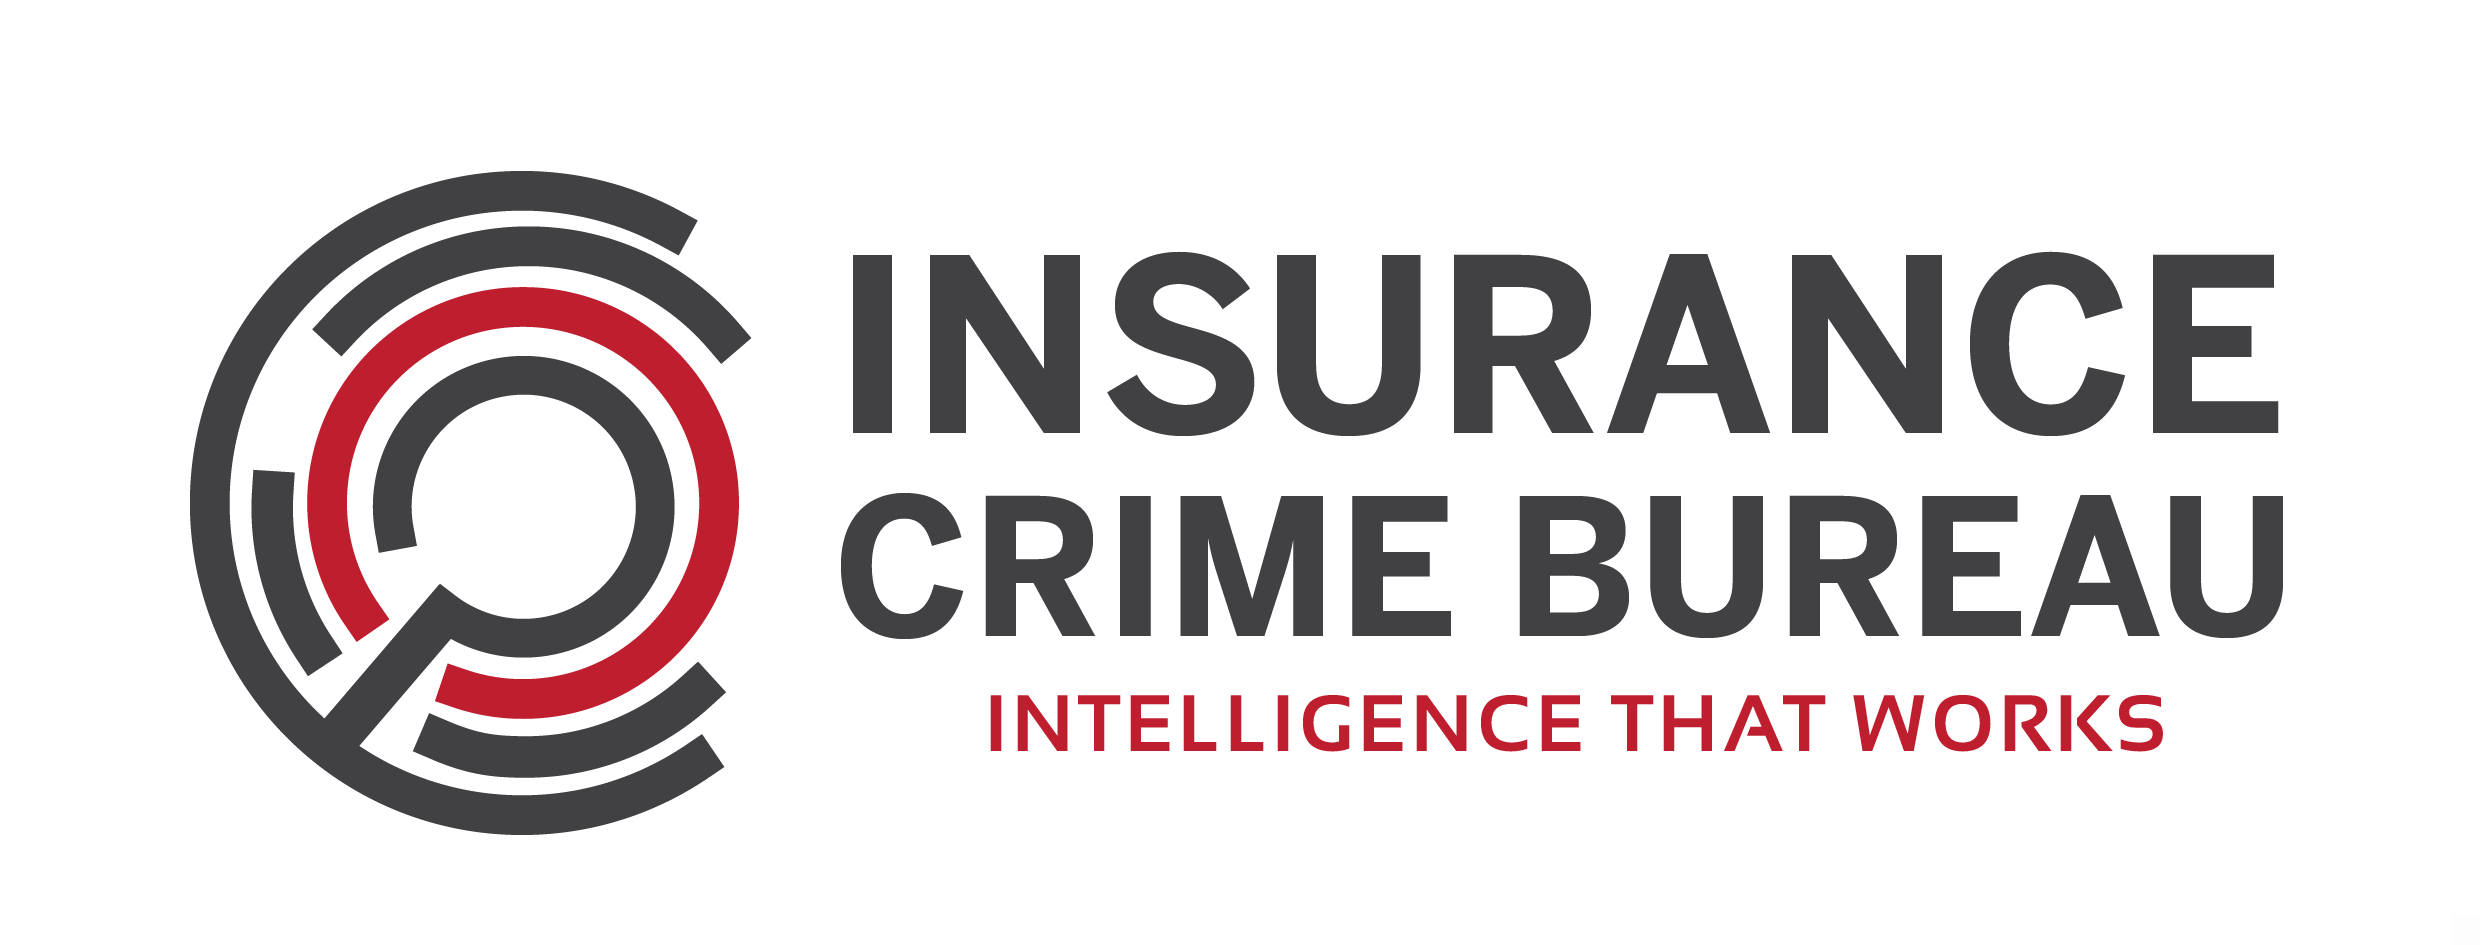 The Insurance Crime Bureau